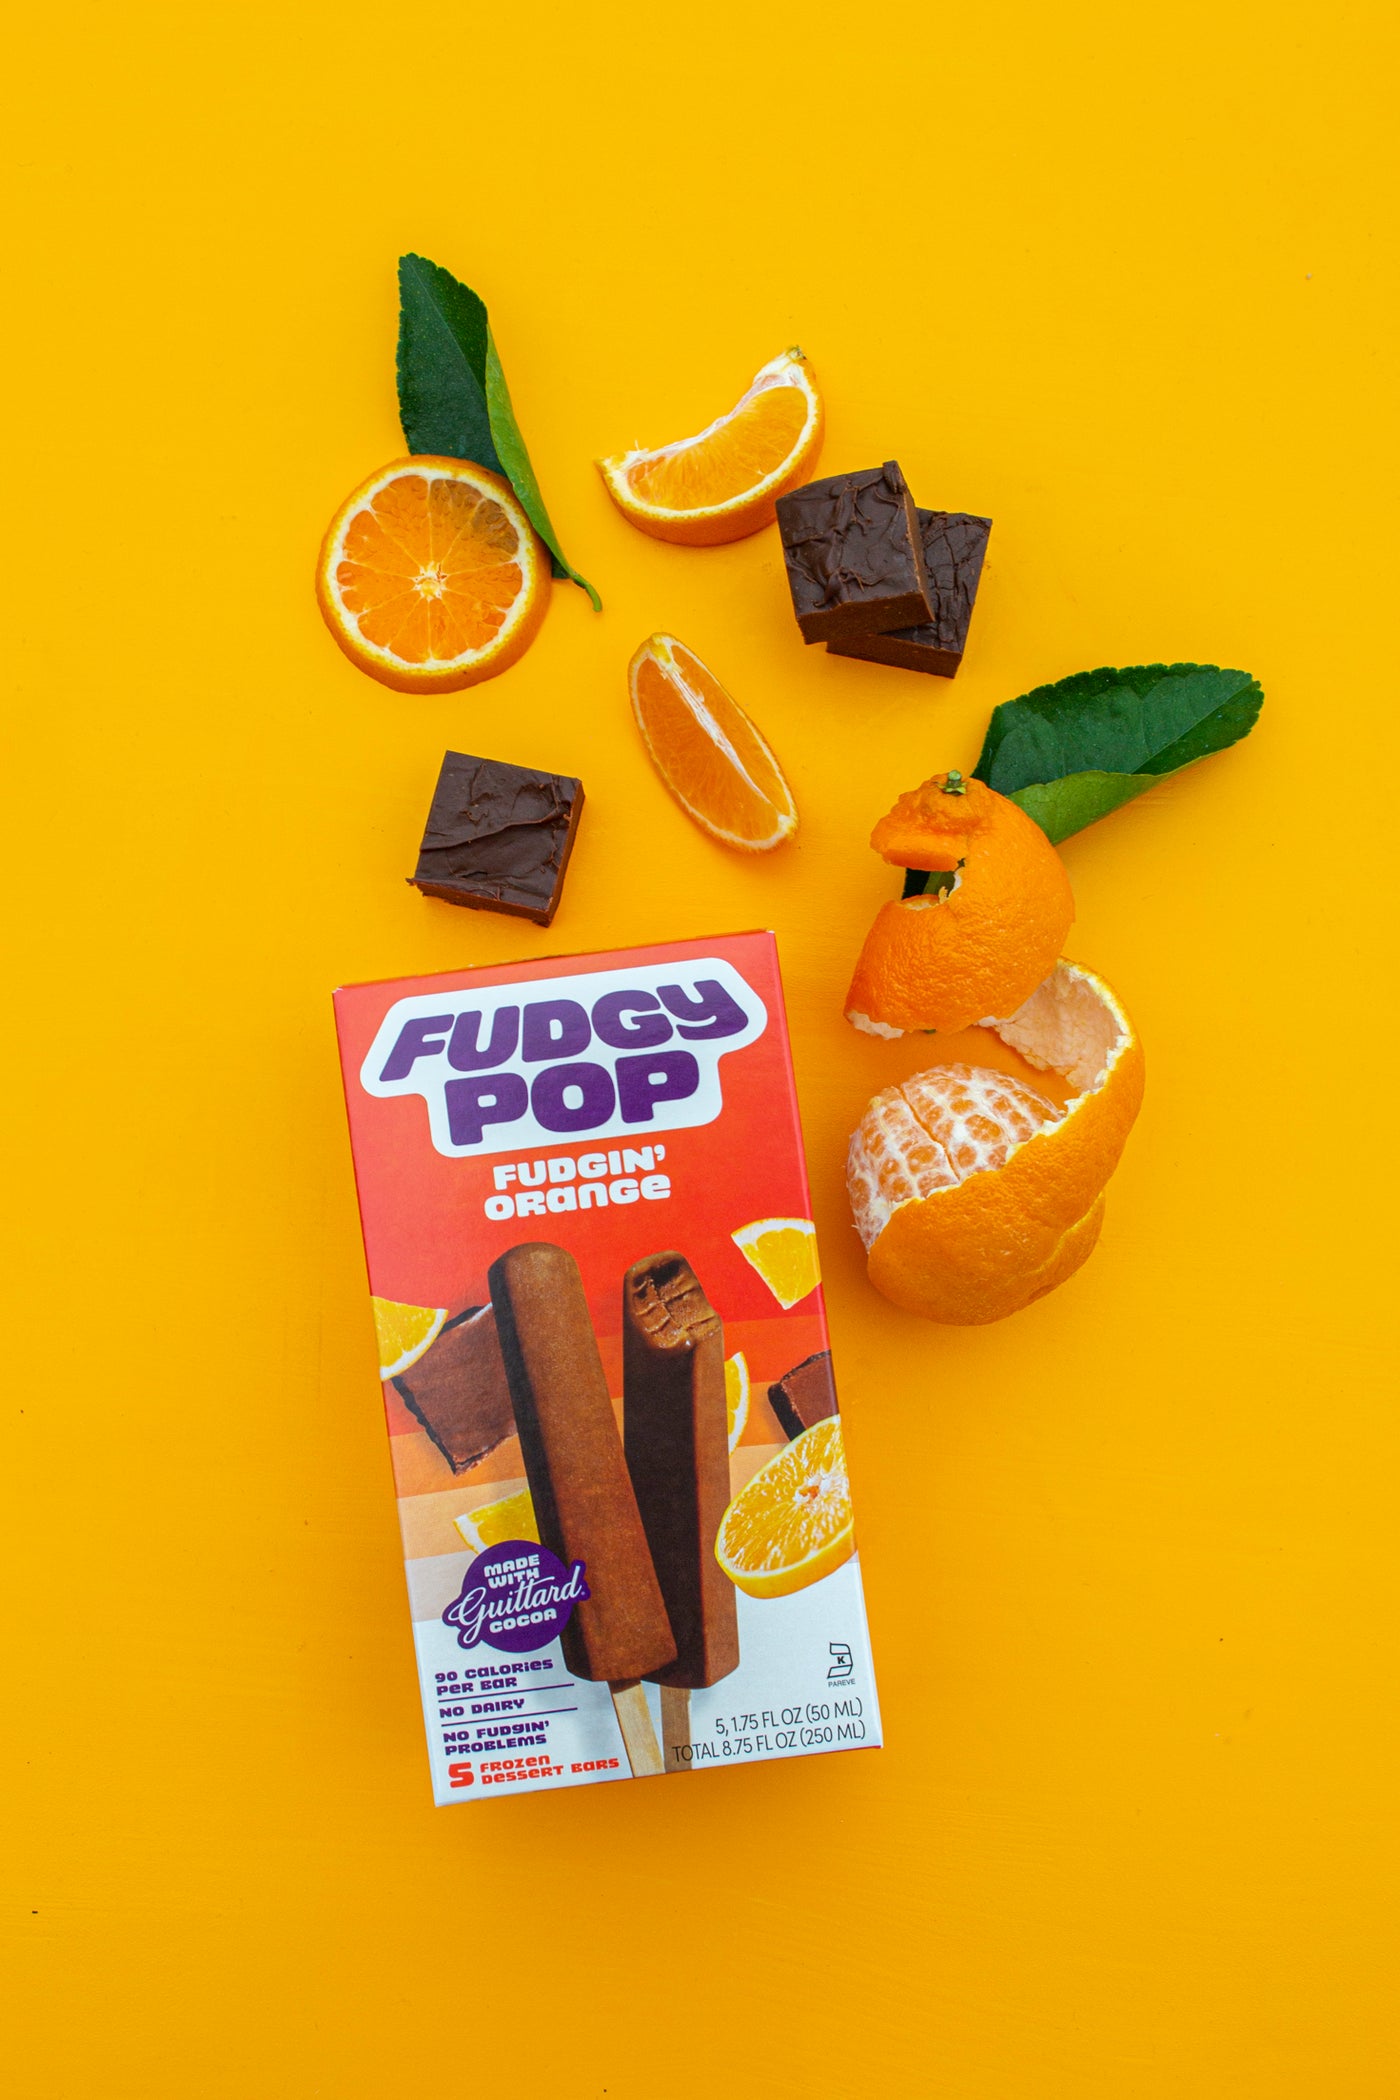 Fudgy Pop Fudgin' Orange with oranges